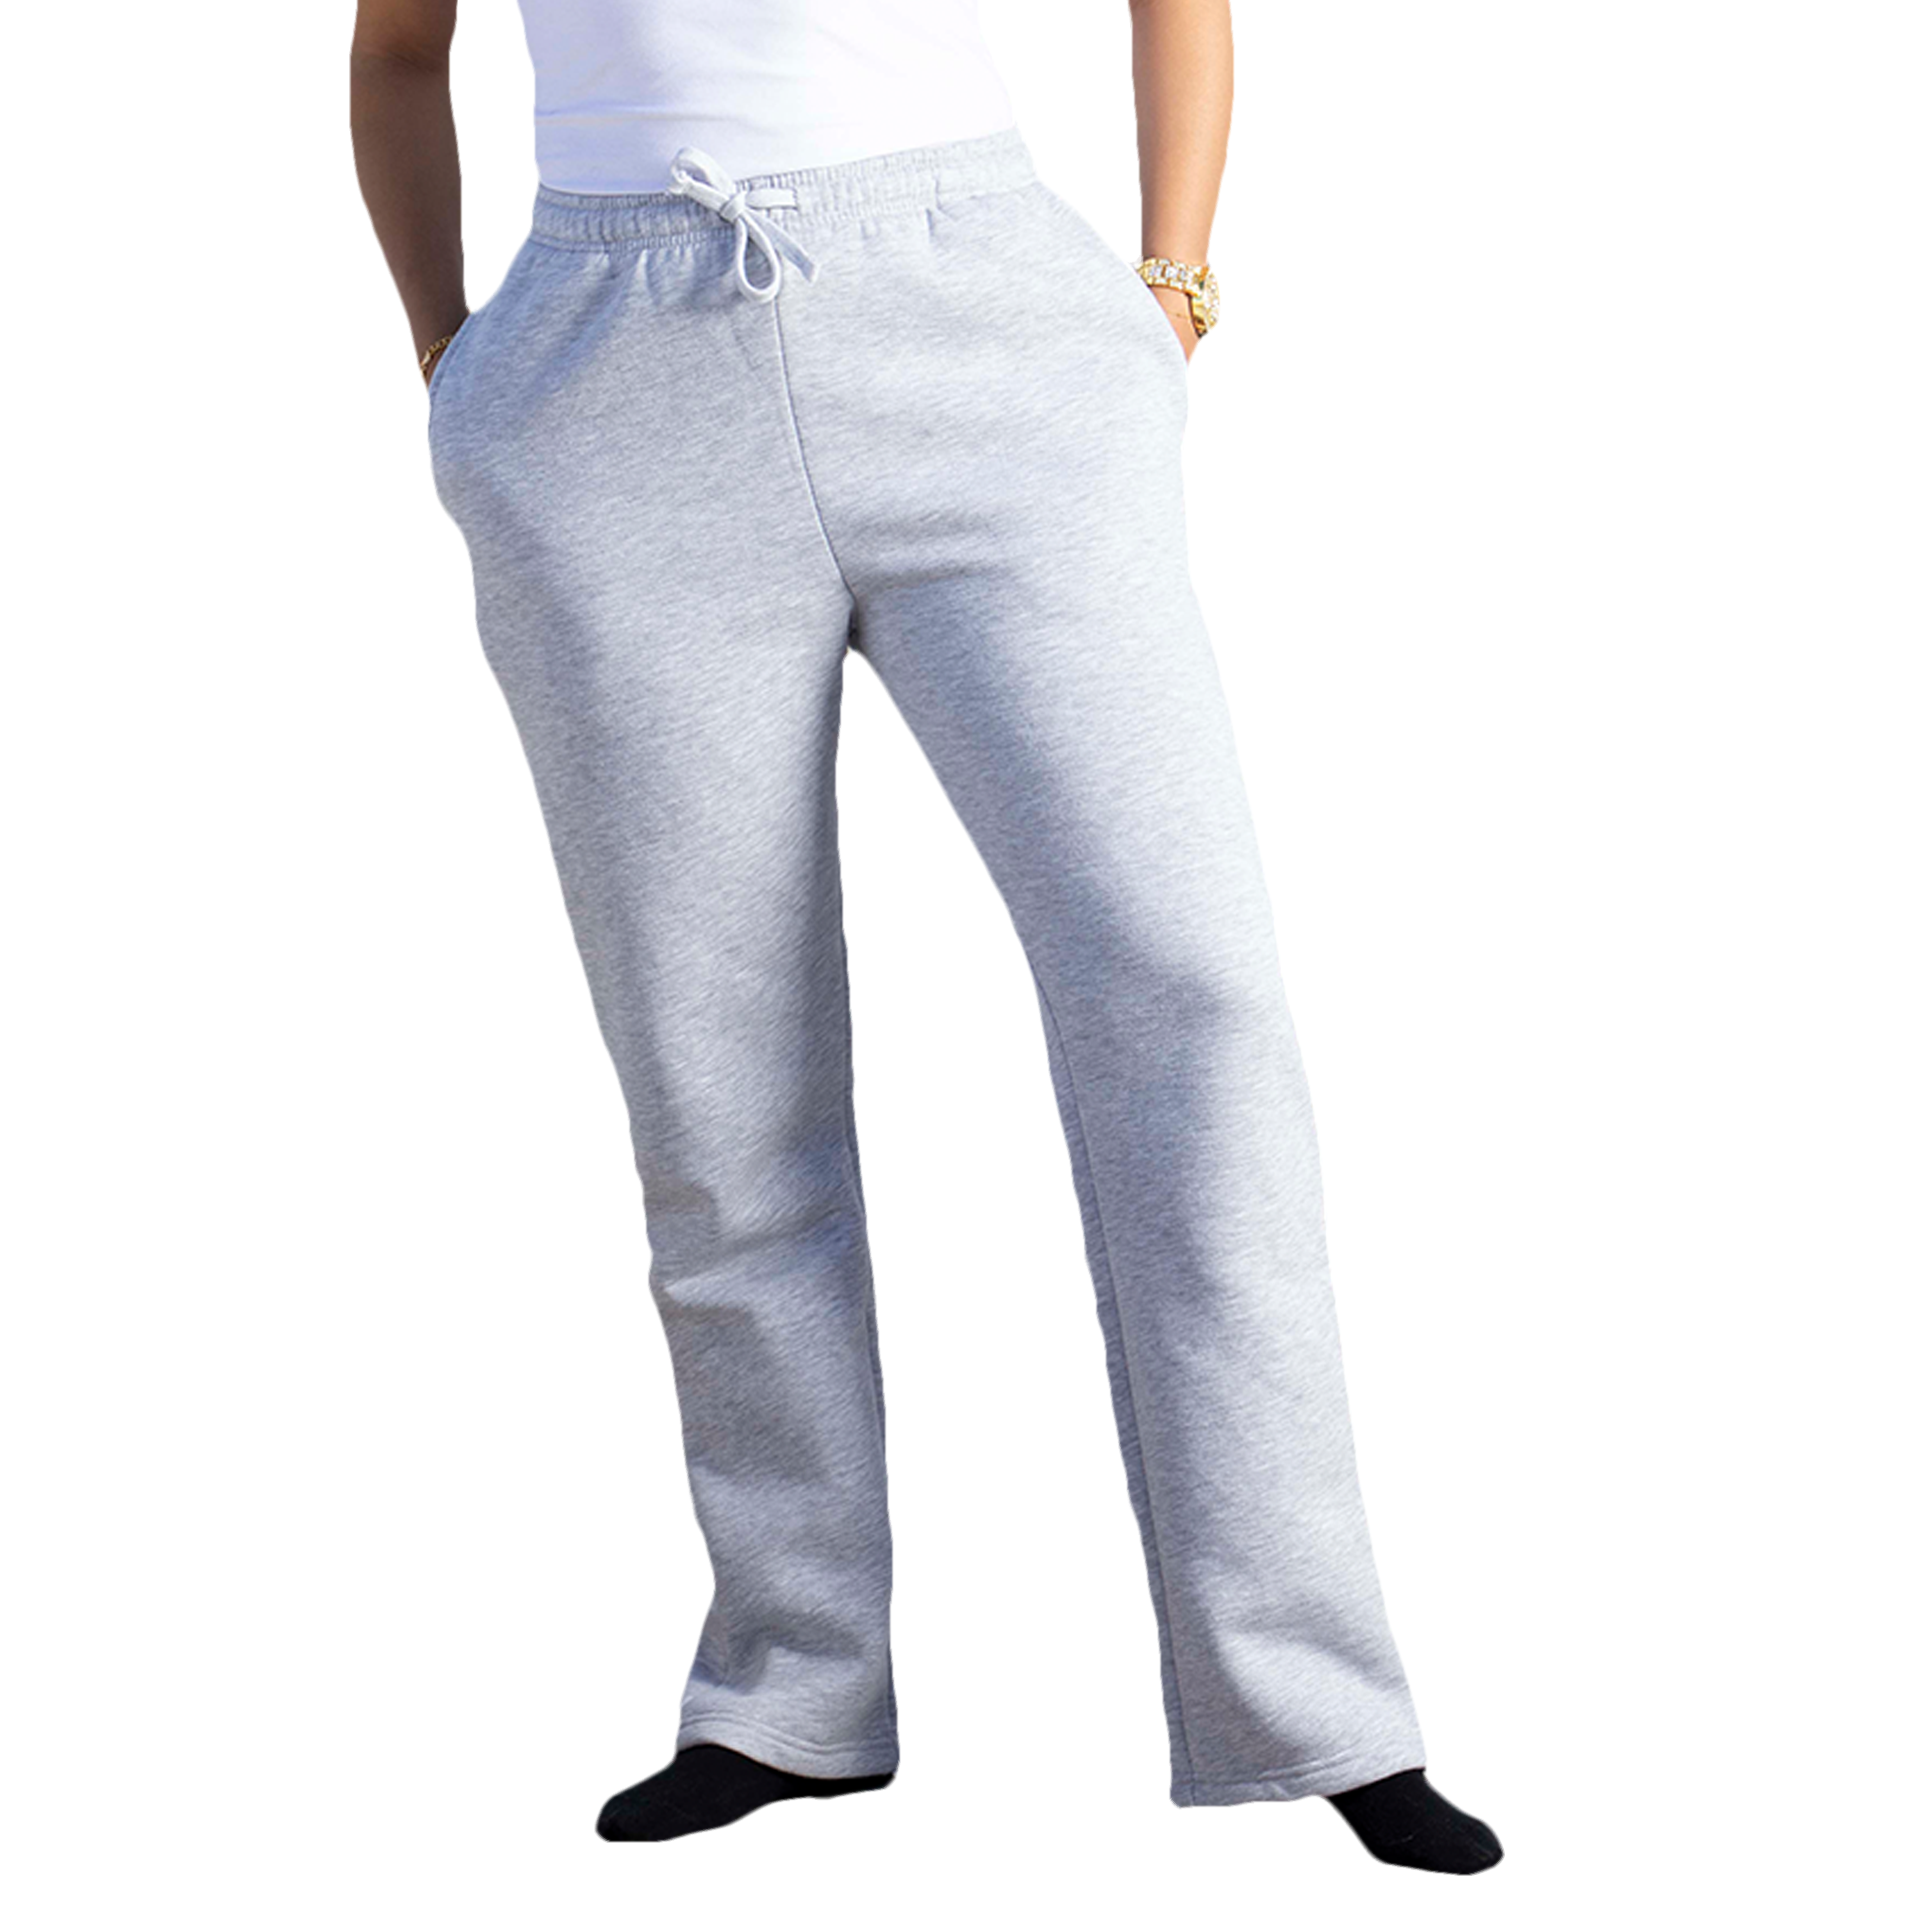 Cotton-fleece pants